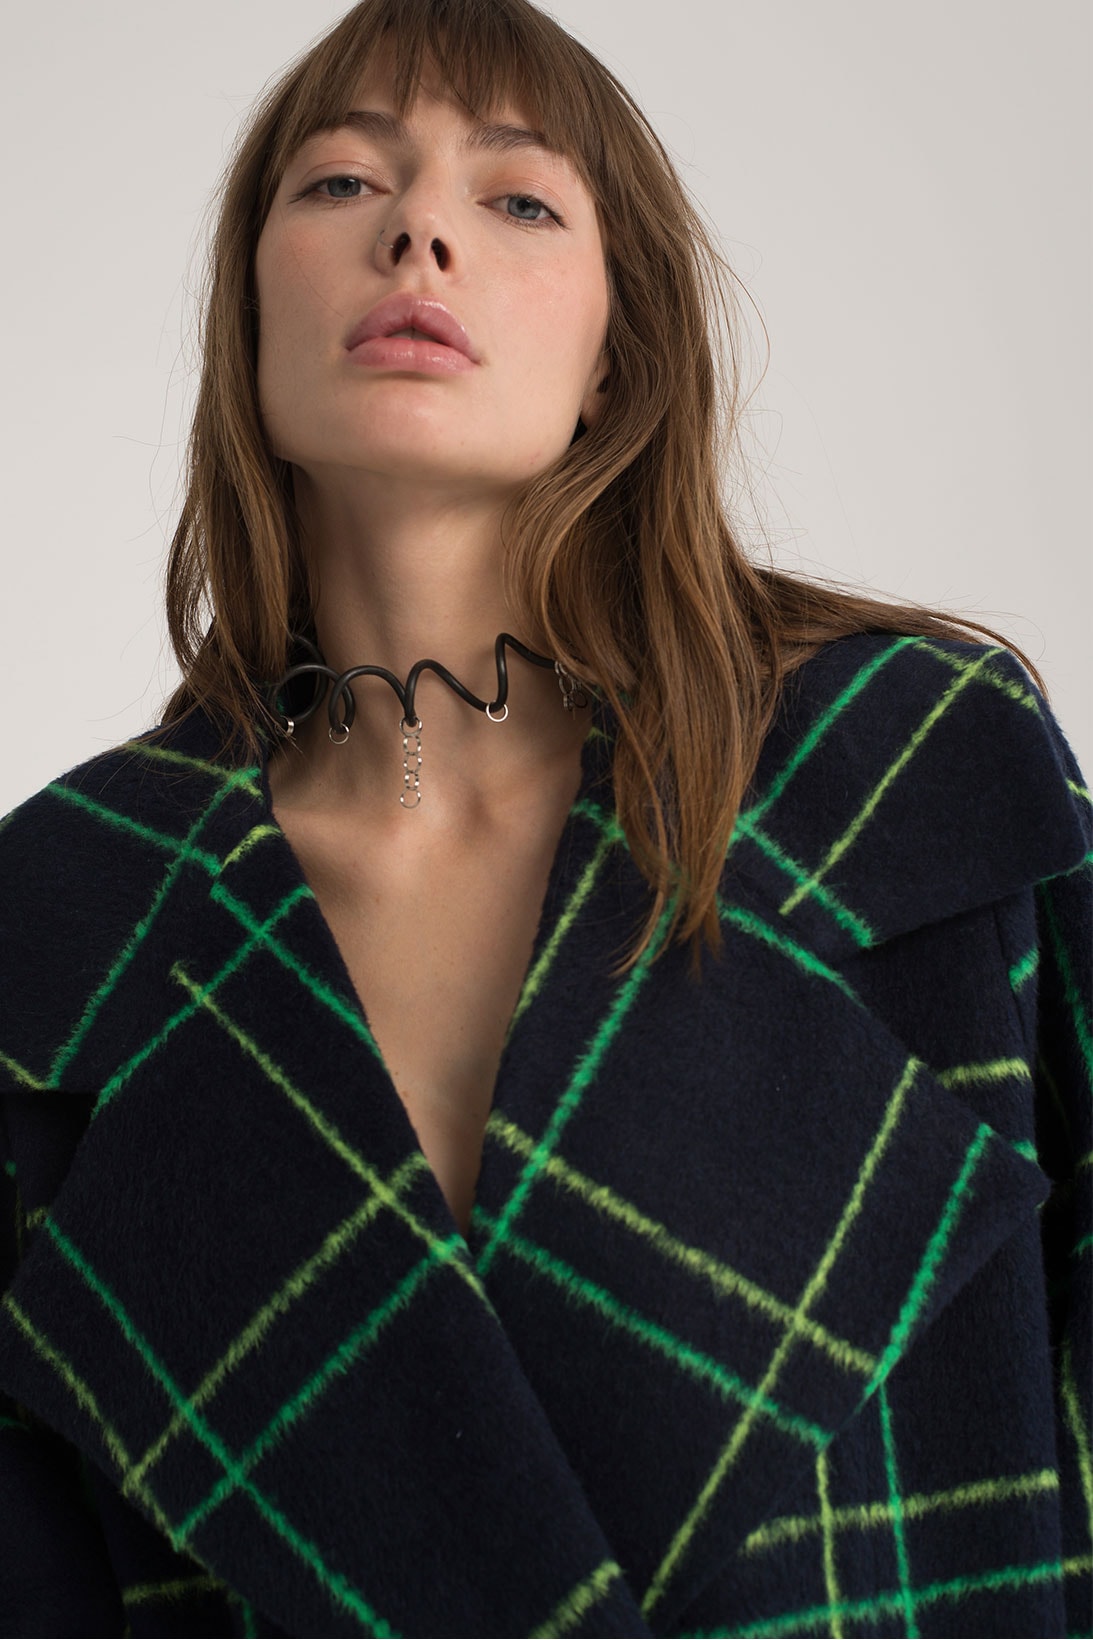 mashat emerging ukrainian sustainable brand dna collection blazers coats dresses accessories